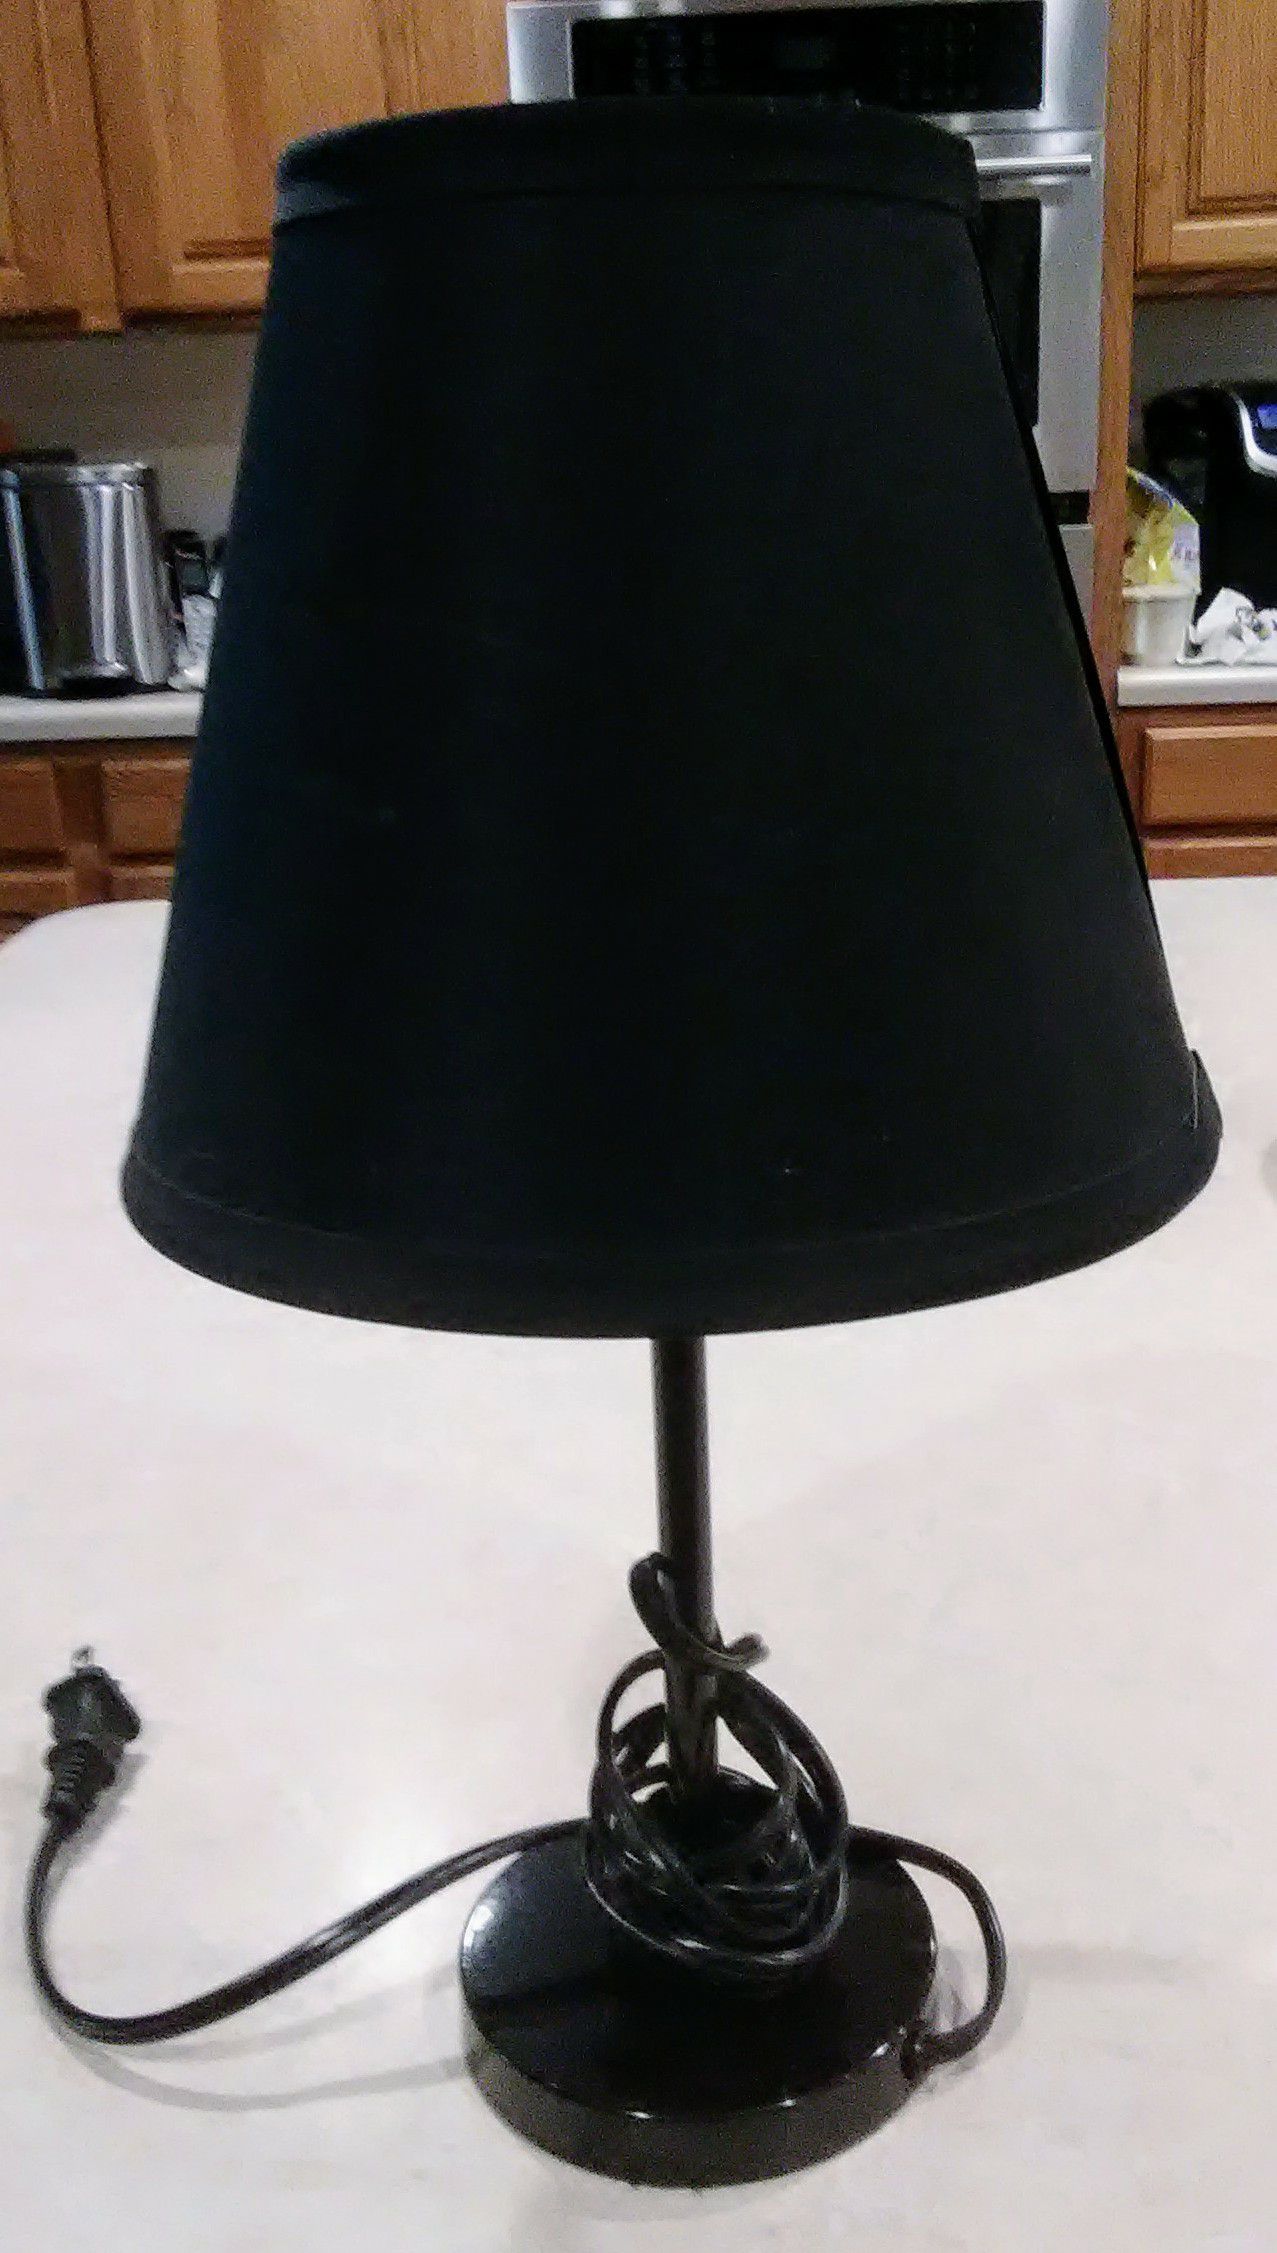 15" desk lamp, black